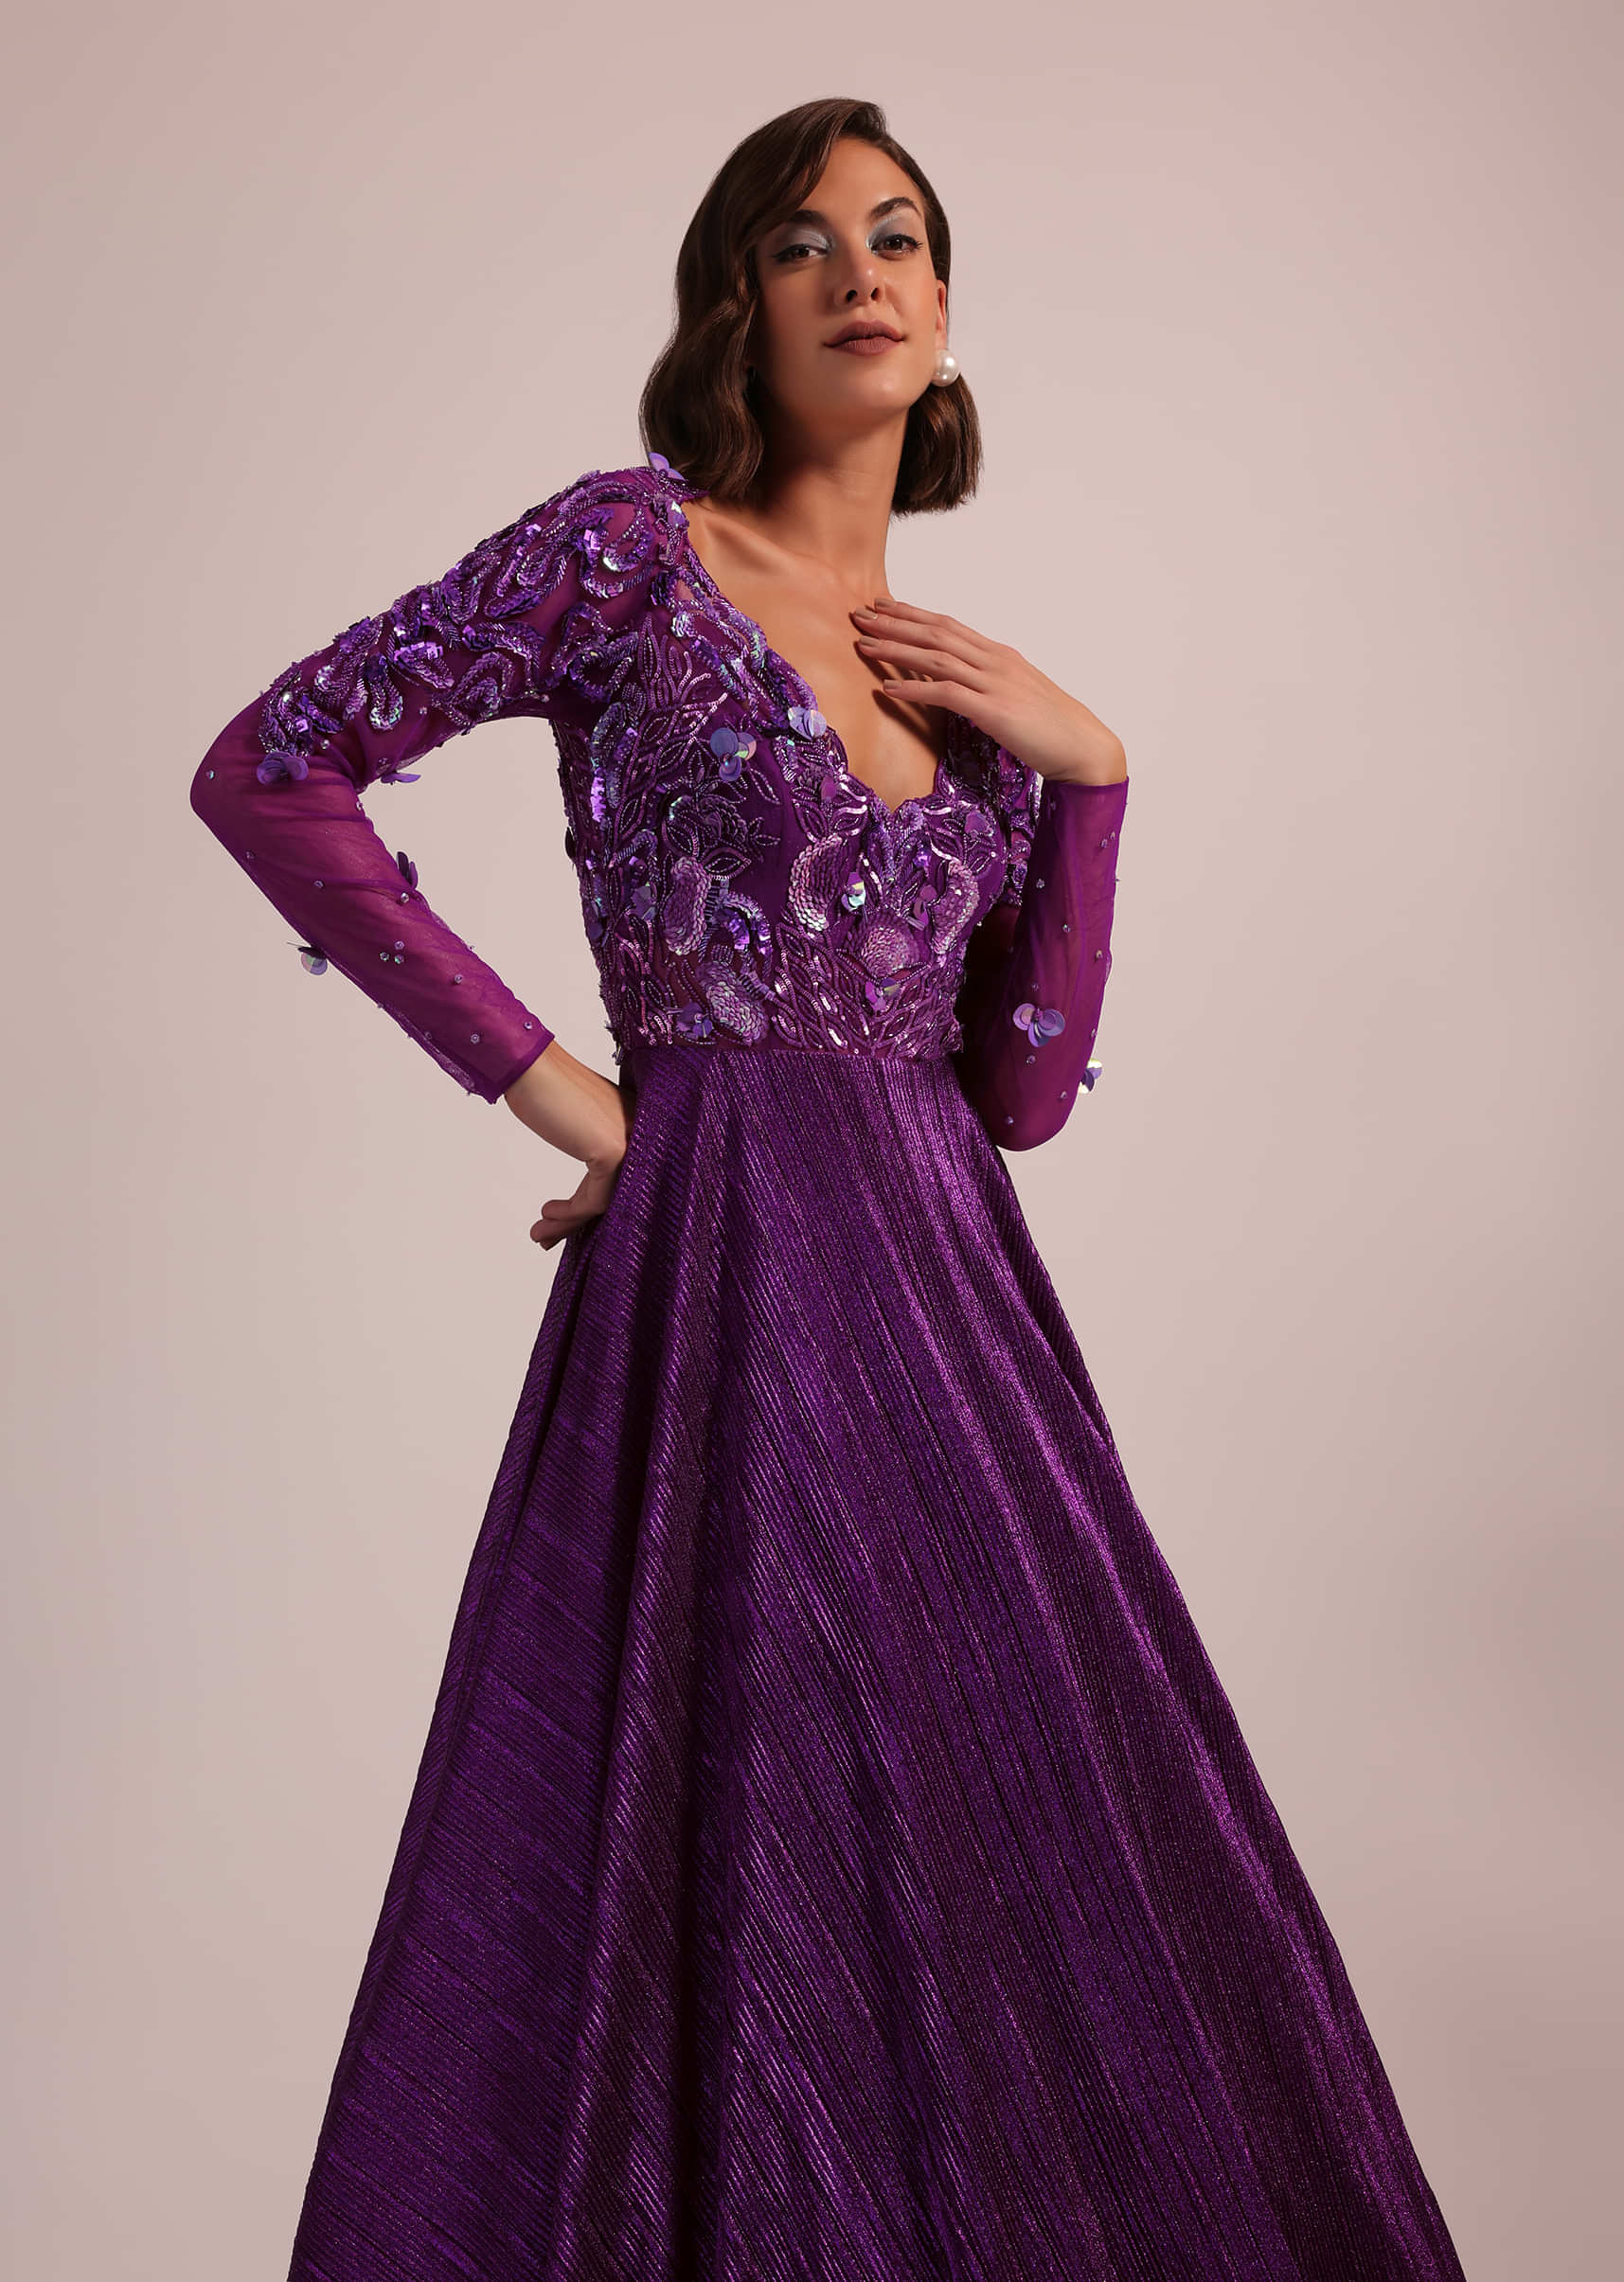 Gowns for Women - Latest Party Wear & Designer Gowns Online | Kalki Fashion